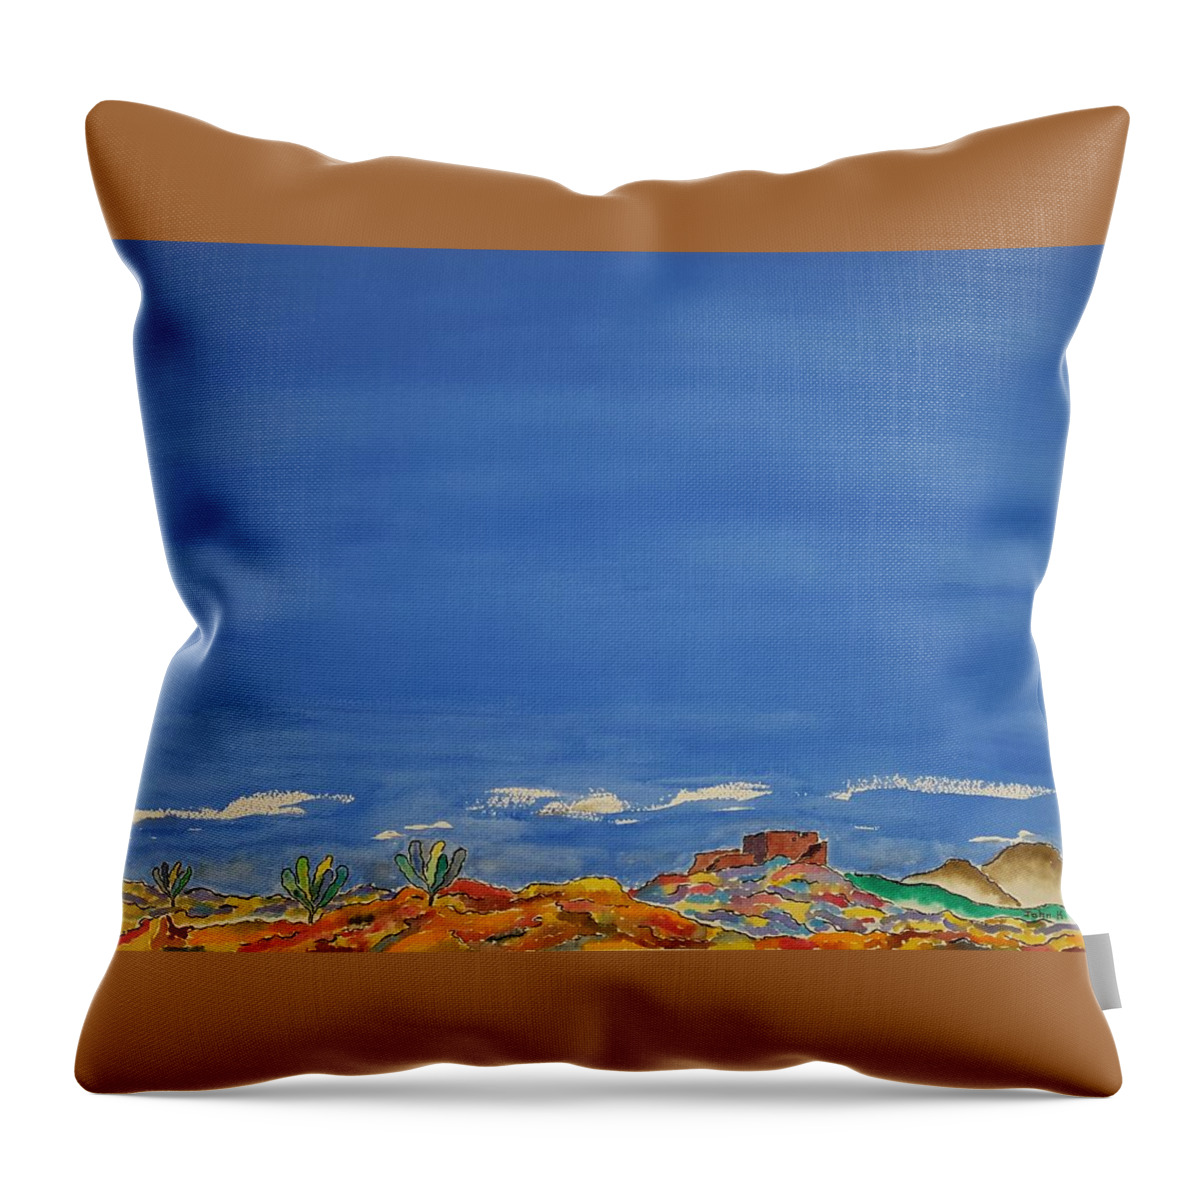 Watercolor Throw Pillow featuring the painting Desert Panorama by John Klobucher